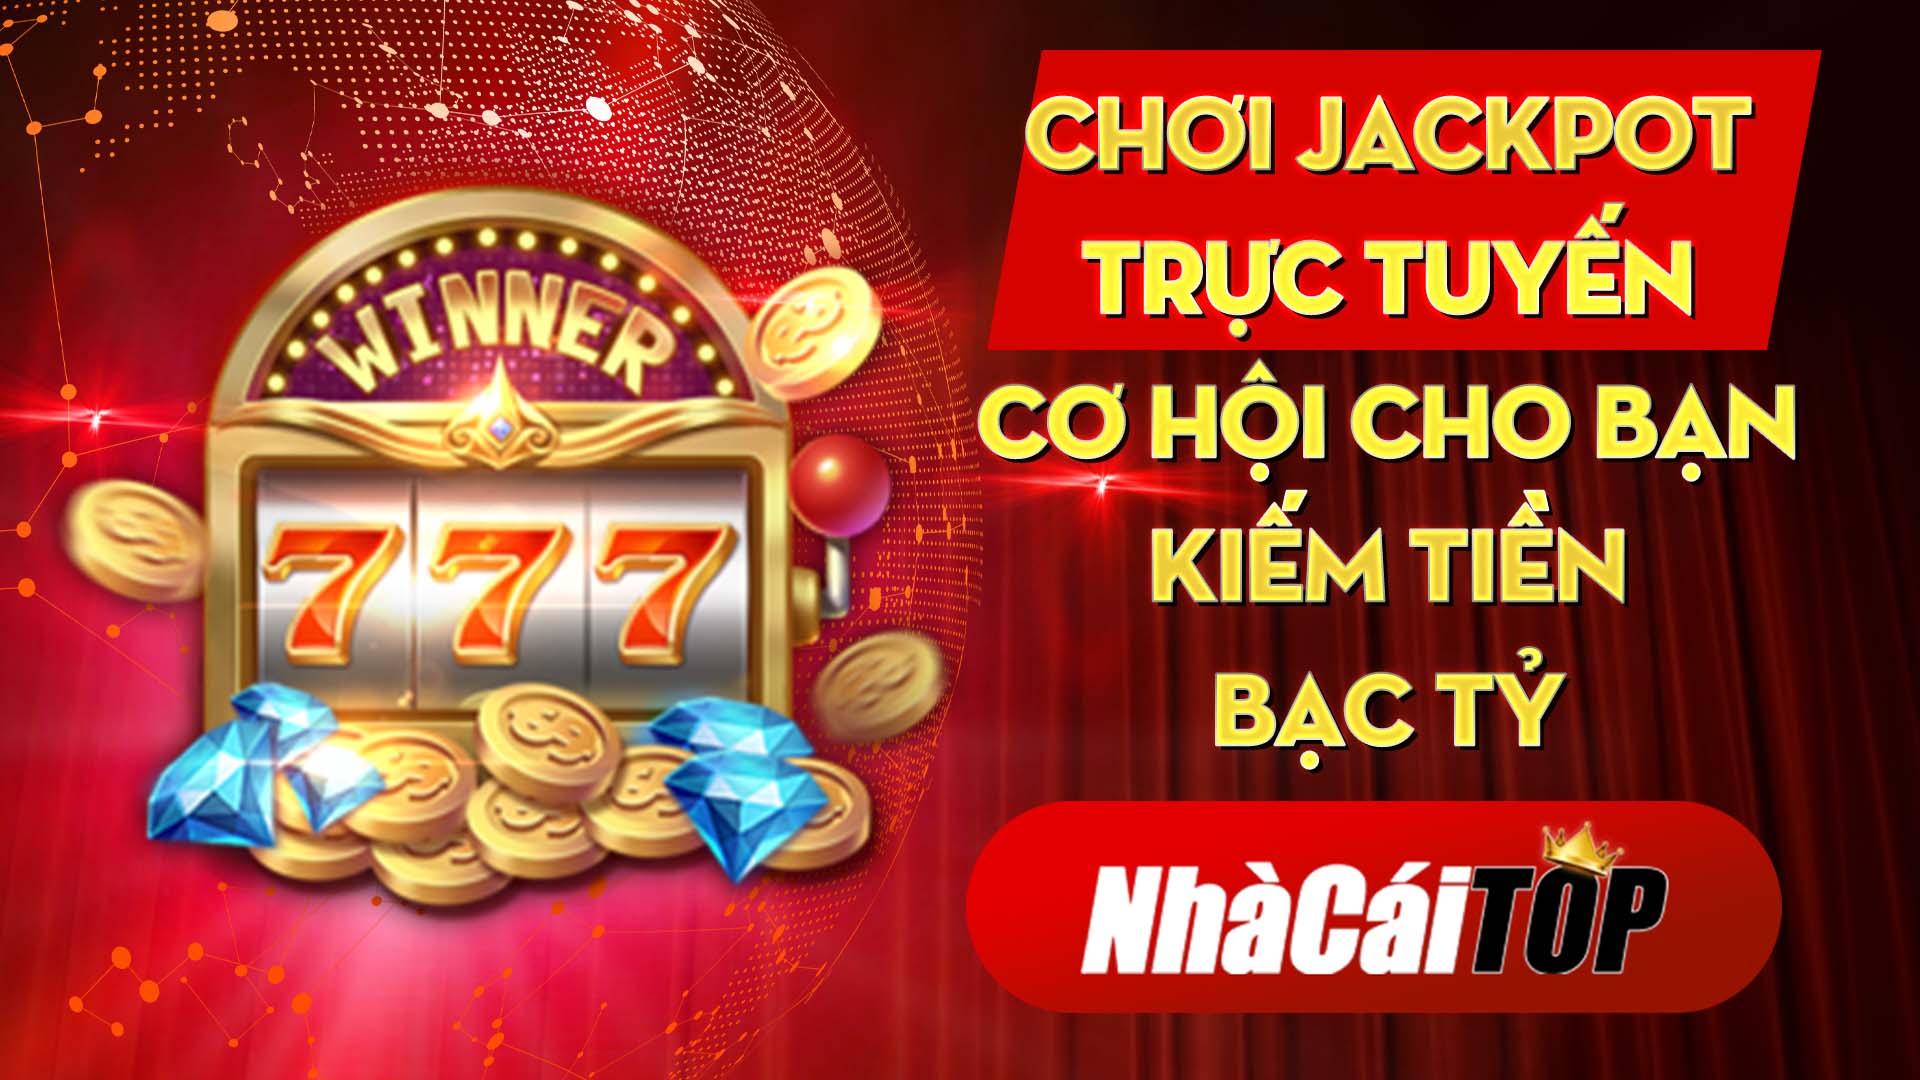 25 Choi Jackpot Truc Tuyen – Co Hoi Cho Ban Kiem Tien Bac Ty